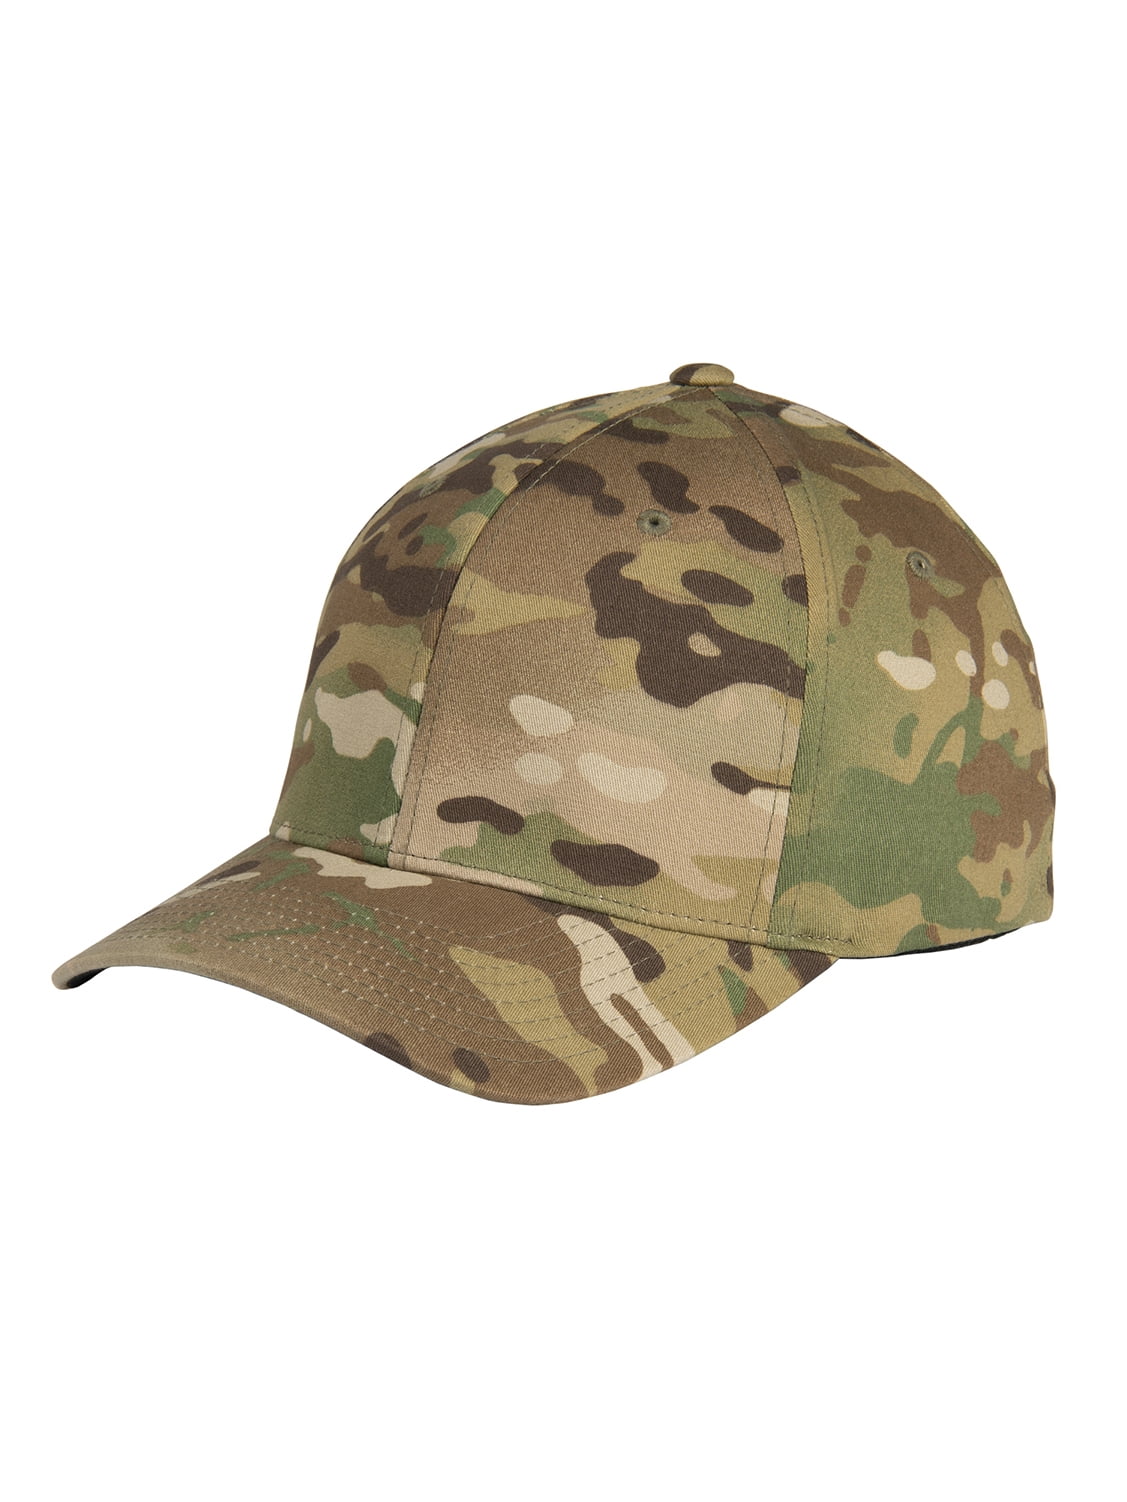 Baseball - Large/X-Large Top Flex - Olive Drab/Green Cap Fit Headwear